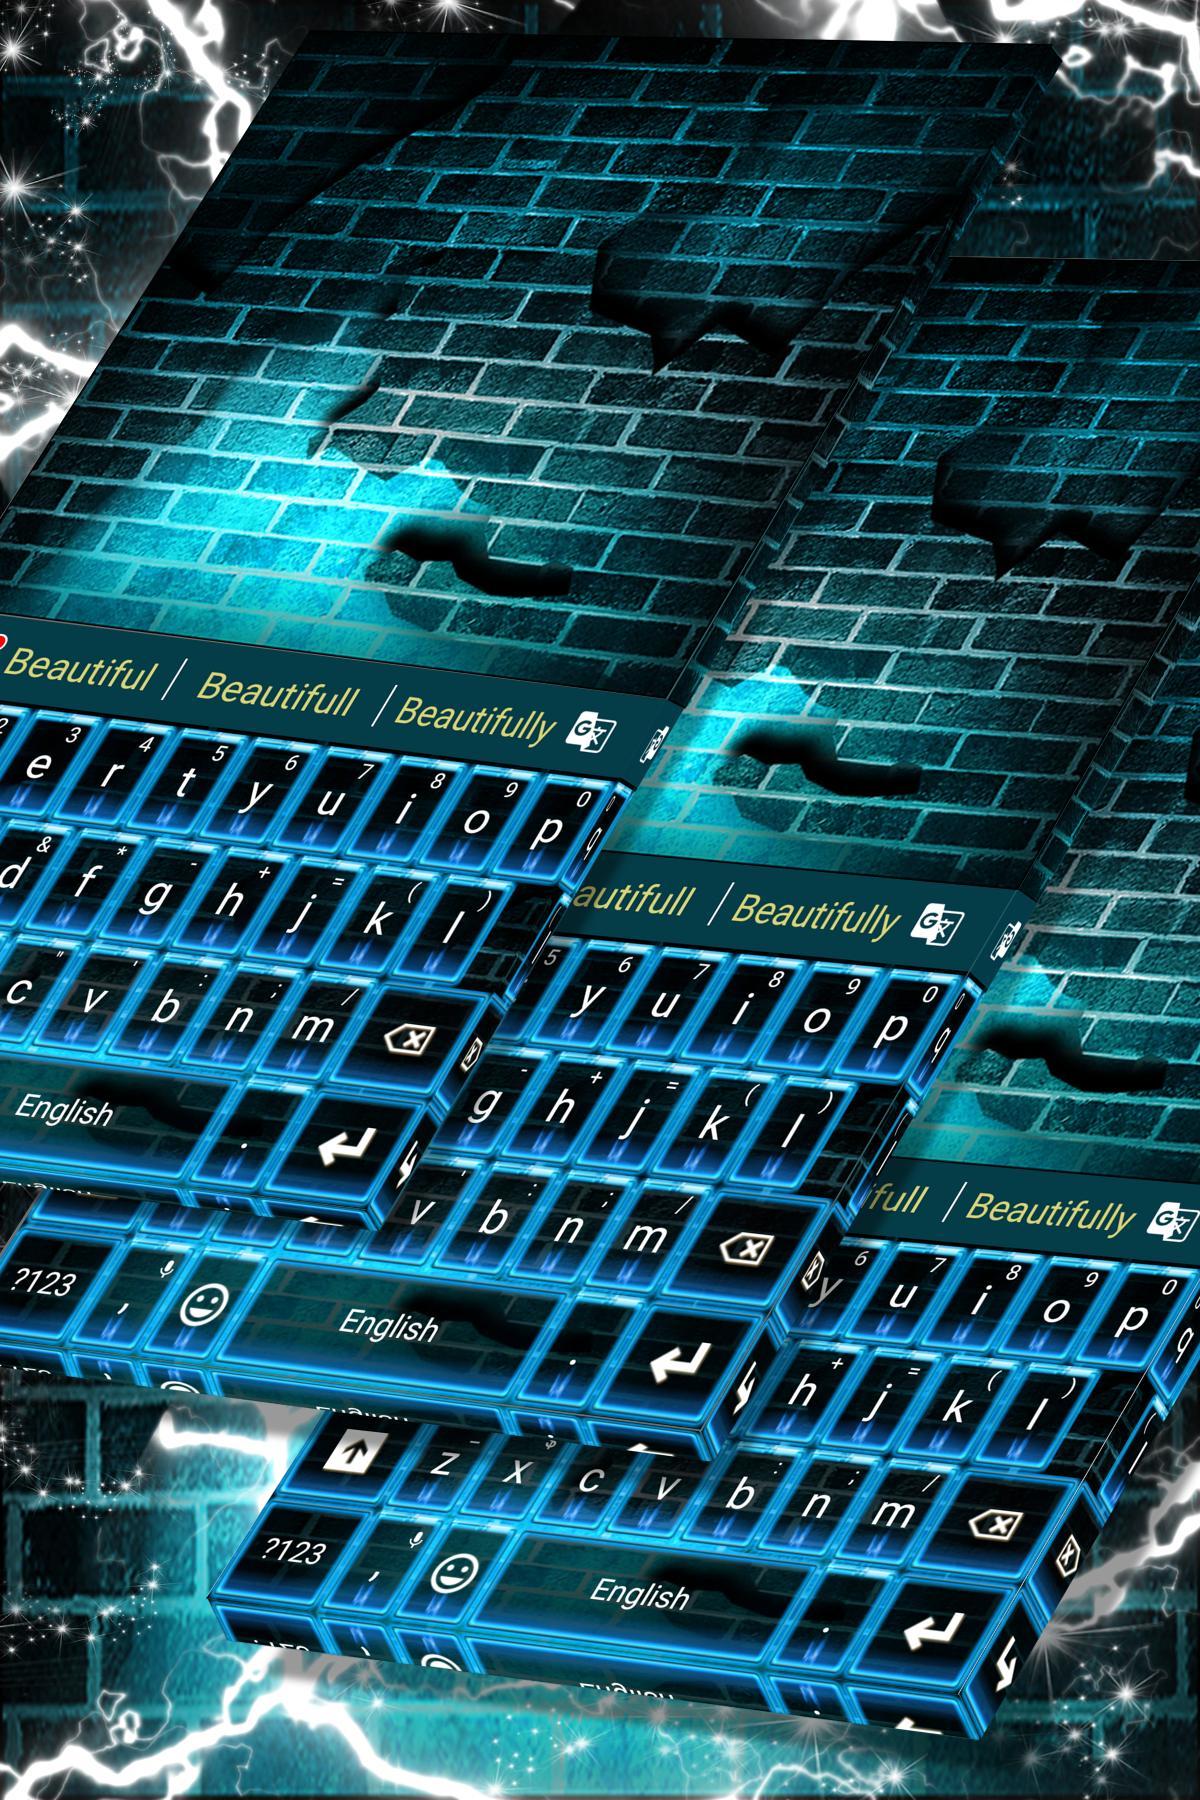 Клавиатура с синей подсветкой. Стена из клавиатур.